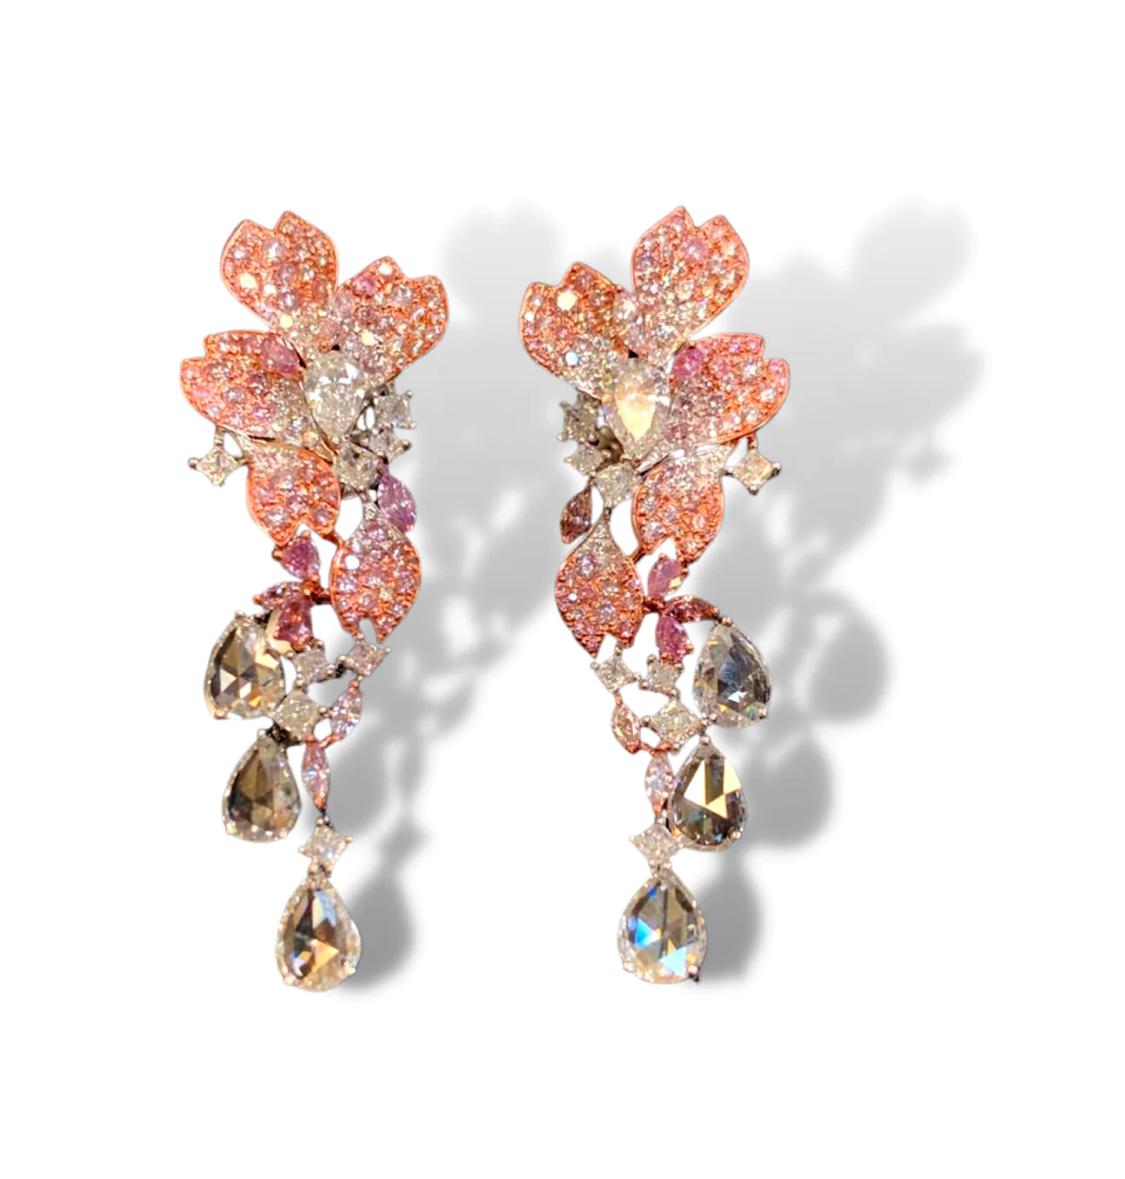 Late Victorian 6.93 Carat Pink & White Diamond 18k Rose & White Gold Chandelier Drop Earrings